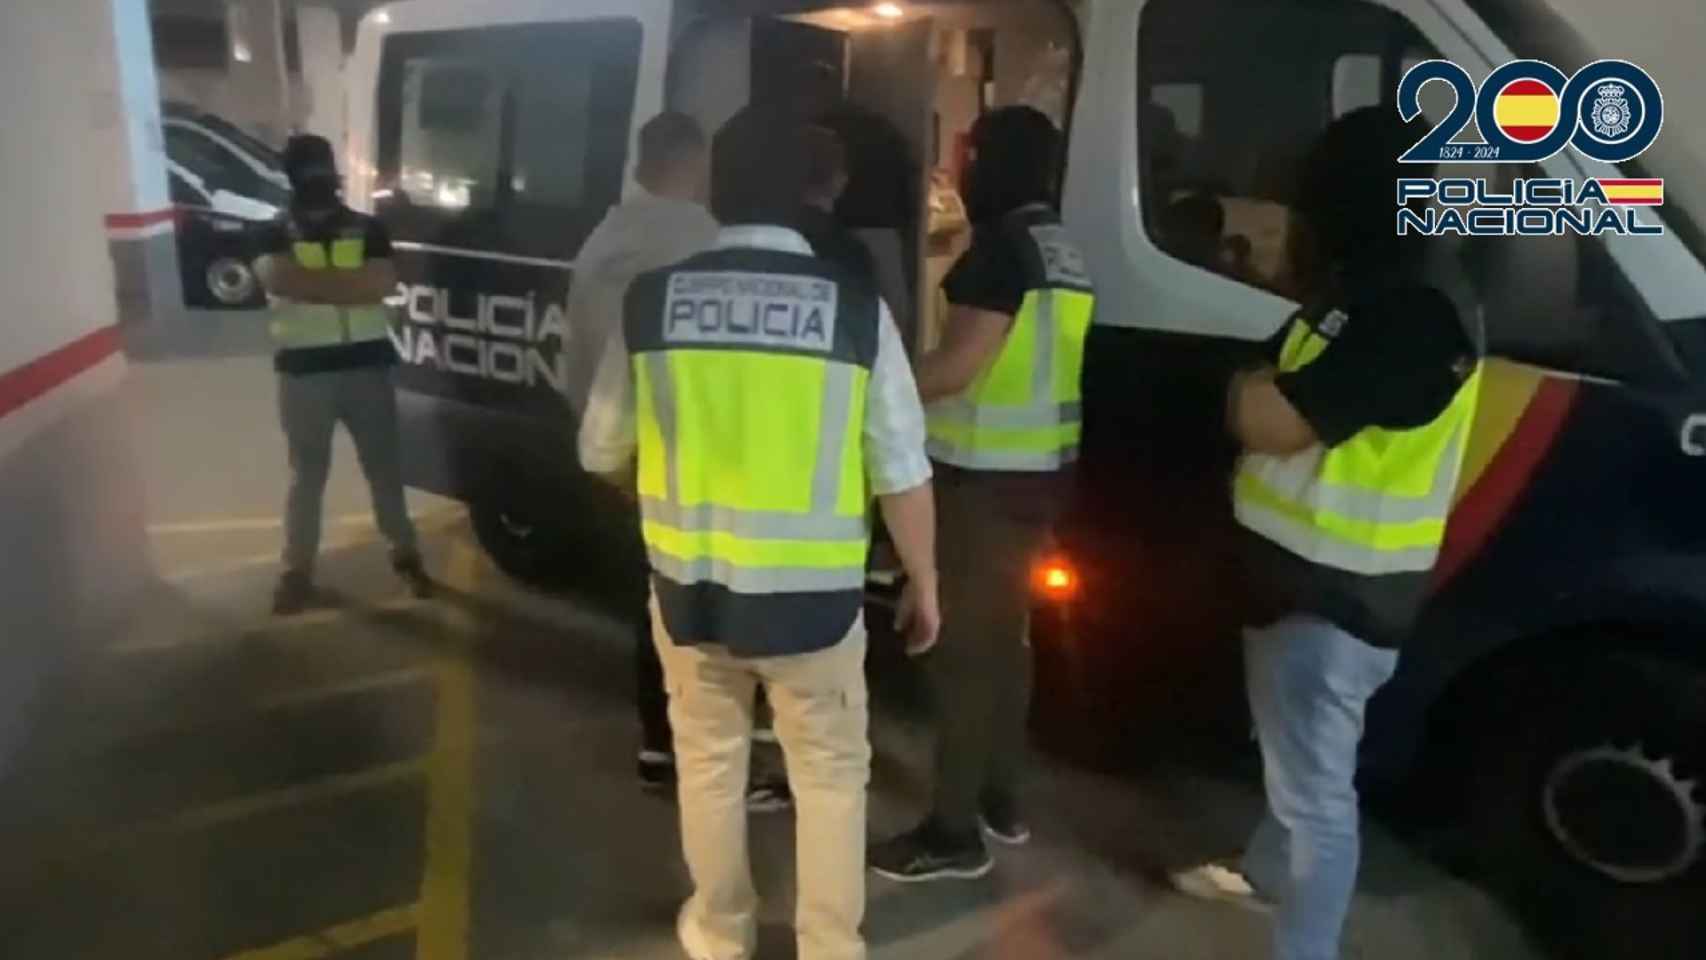 Cinco detenidos por agredir e insultos racistas a un hombre en el aeropuerto de Málaga.